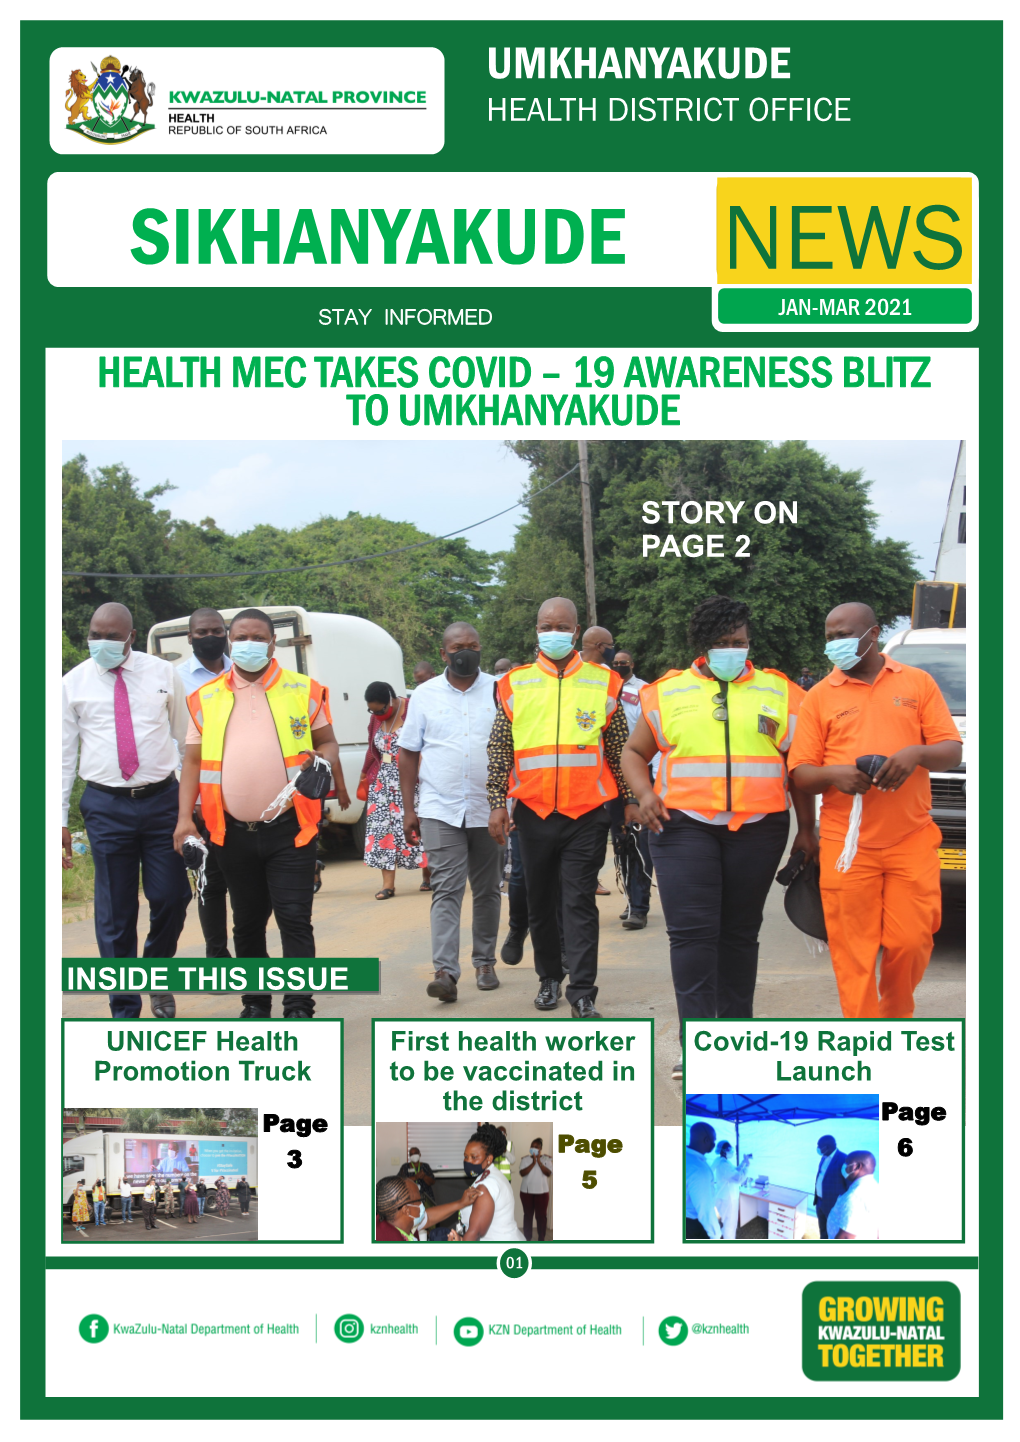 Sikhanyakude News Stay Informed Jan-Mar 2021 Health Mec Takes Covid – 19 Awareness Blitz to Umkhanyakude